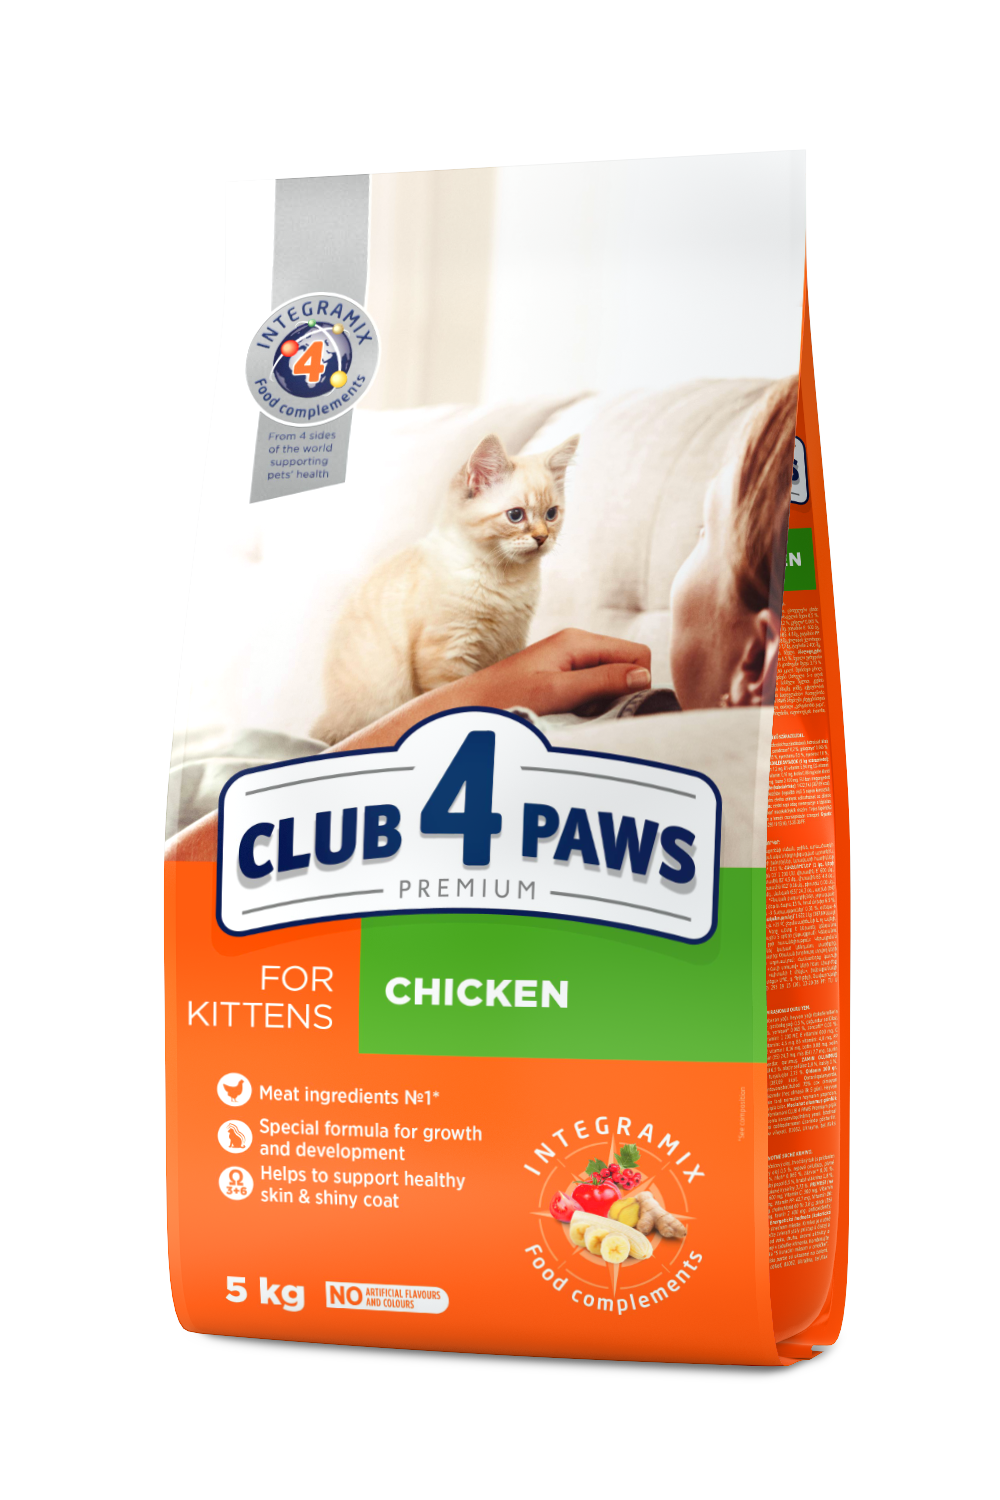 CLUB 4 PAWS Premium For Kittens